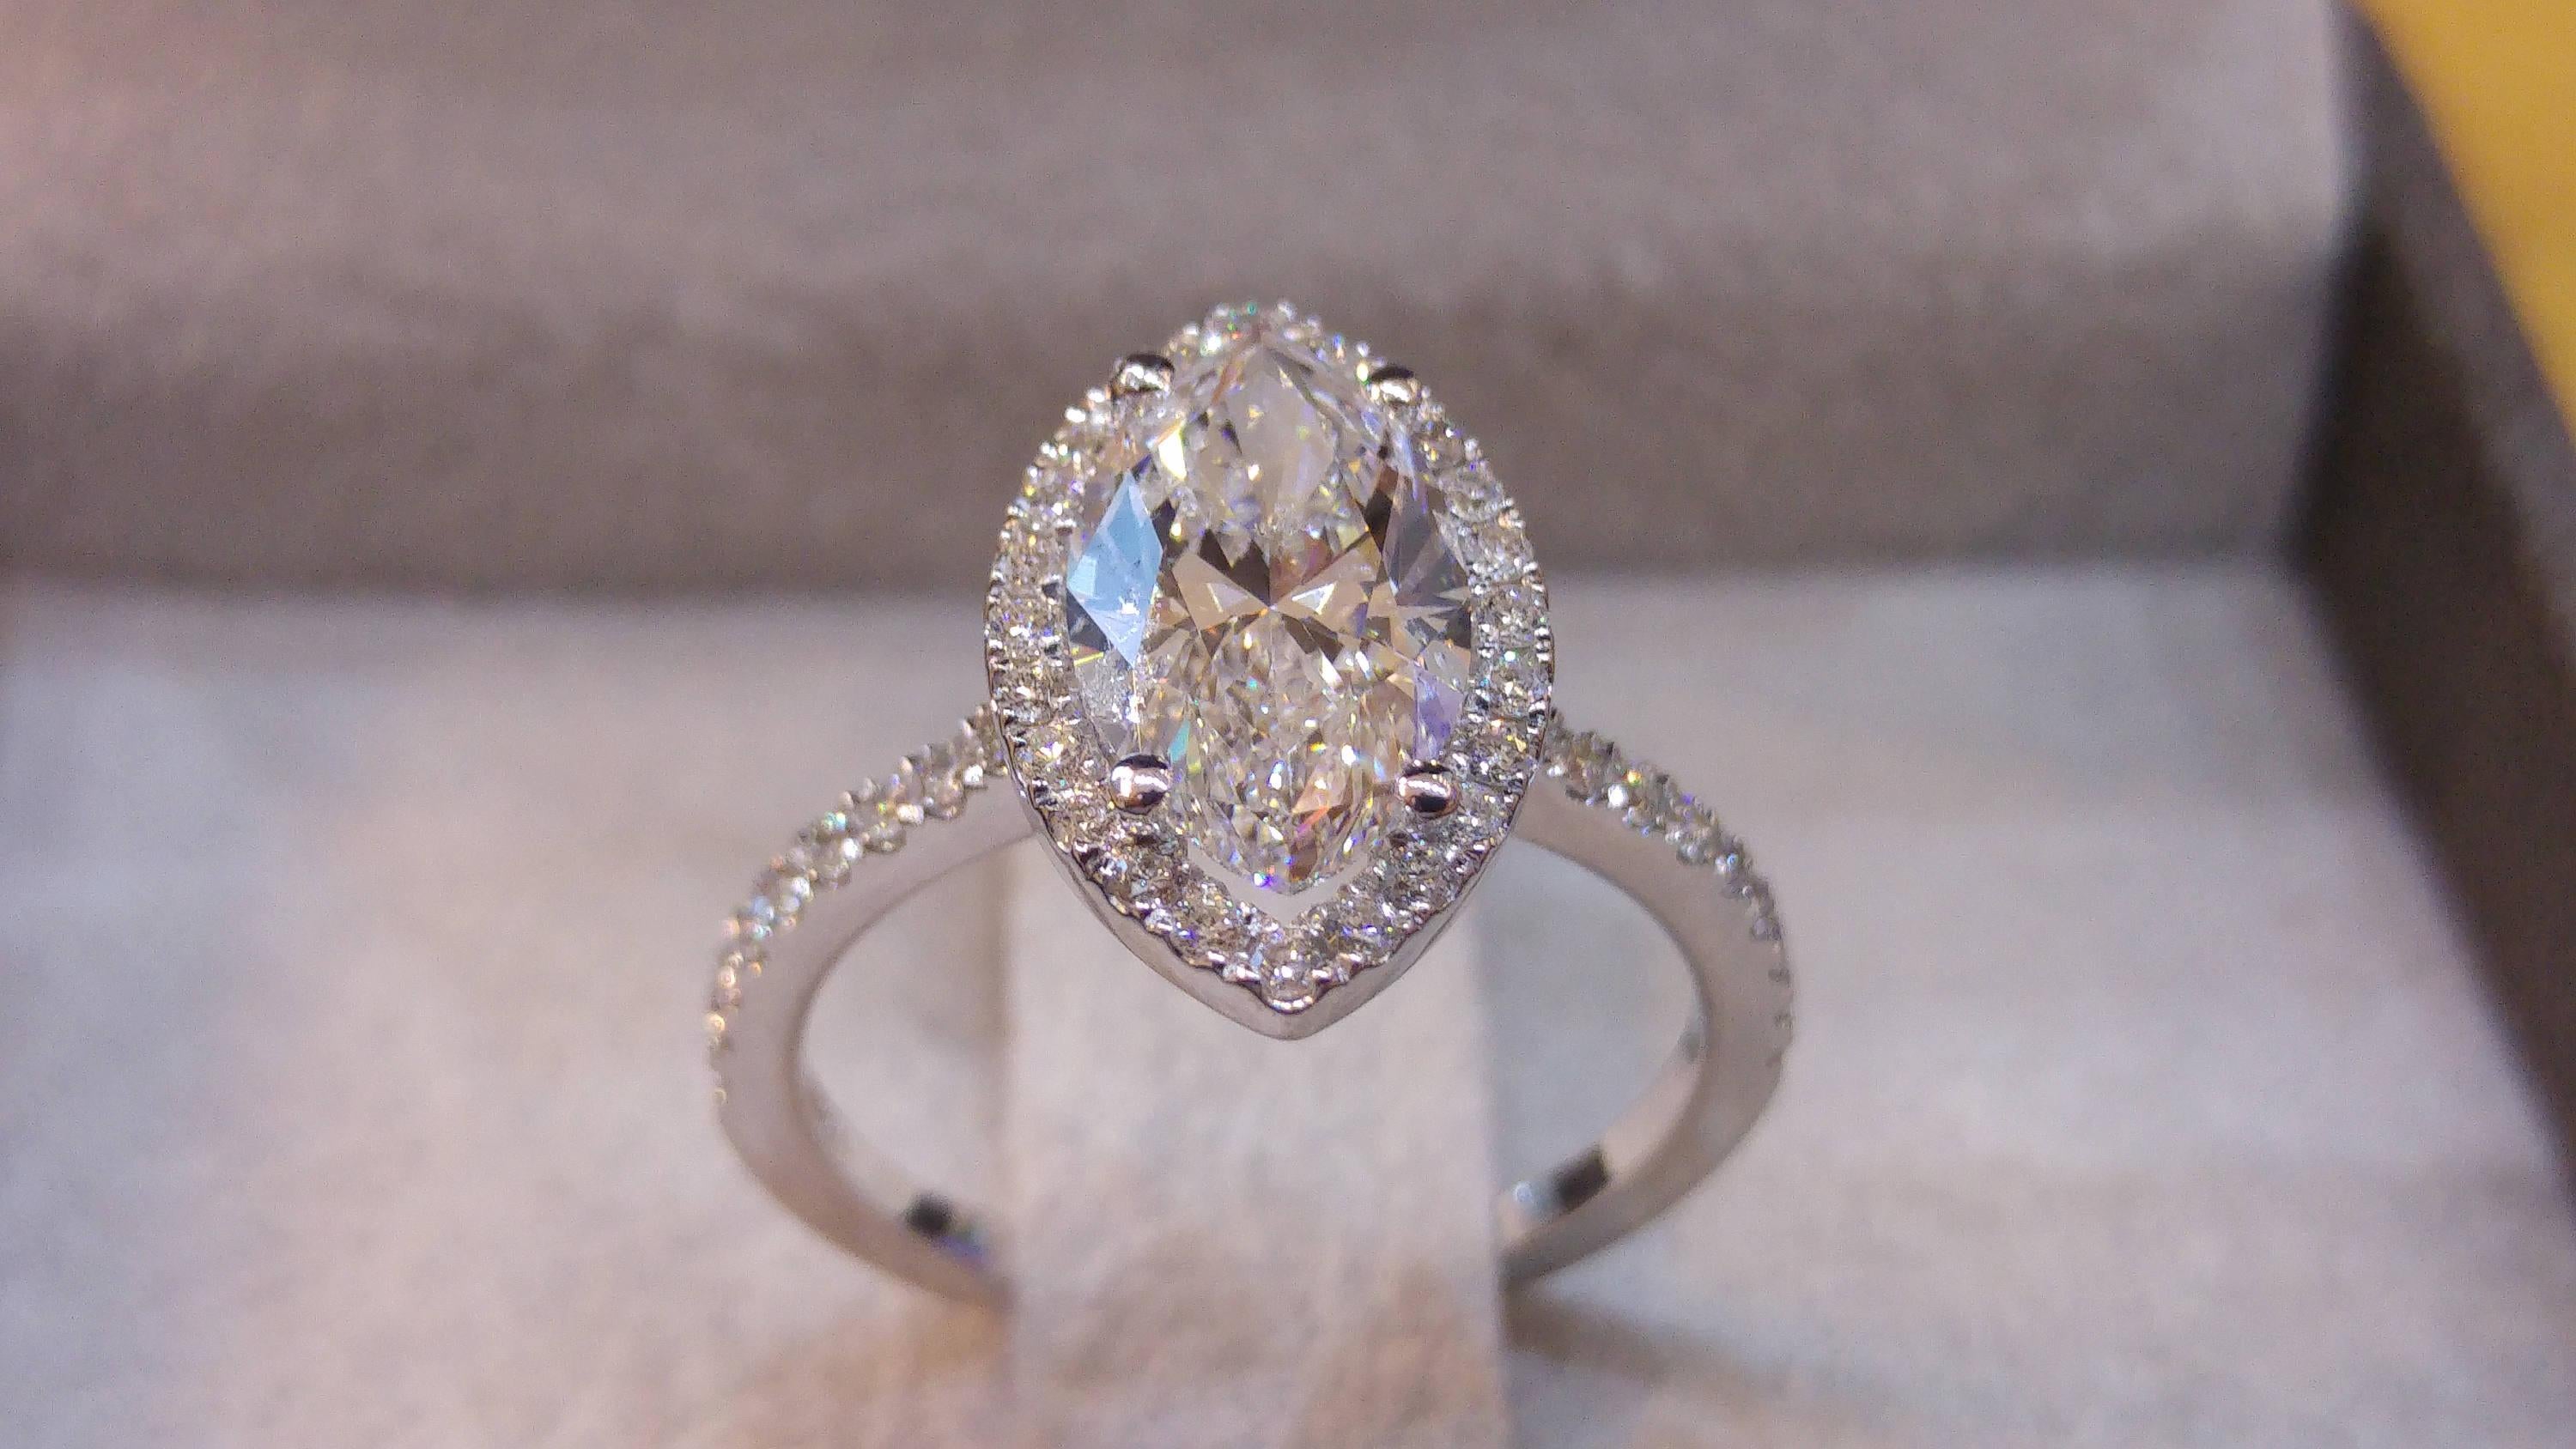 1 1/2 carat marquise diamond ring